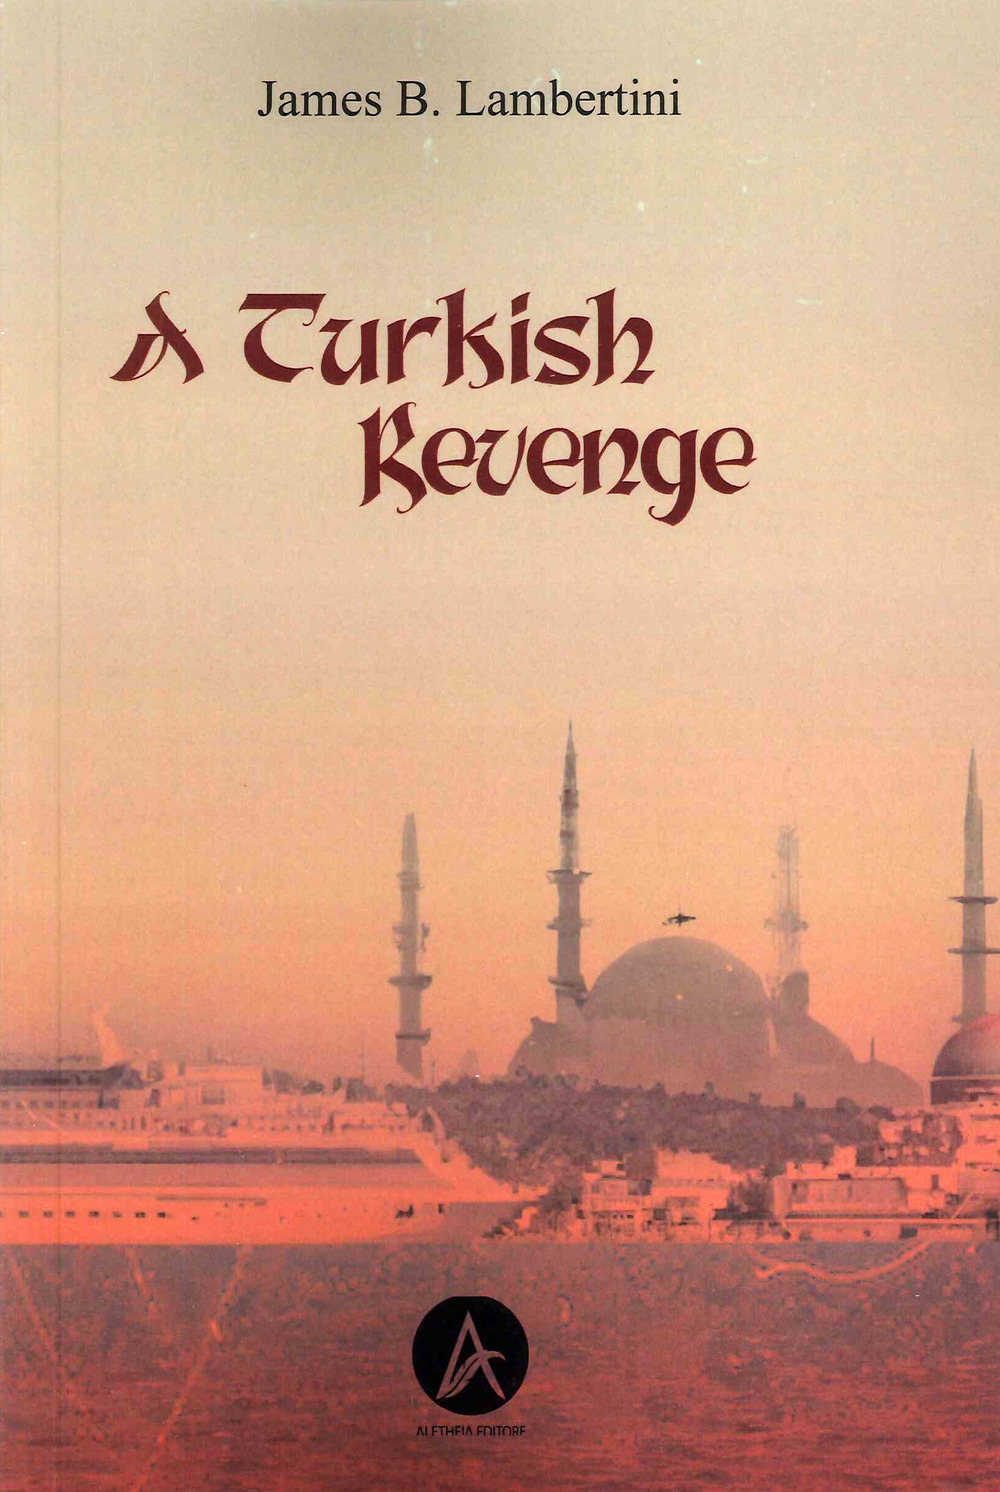 A Turkish revenge